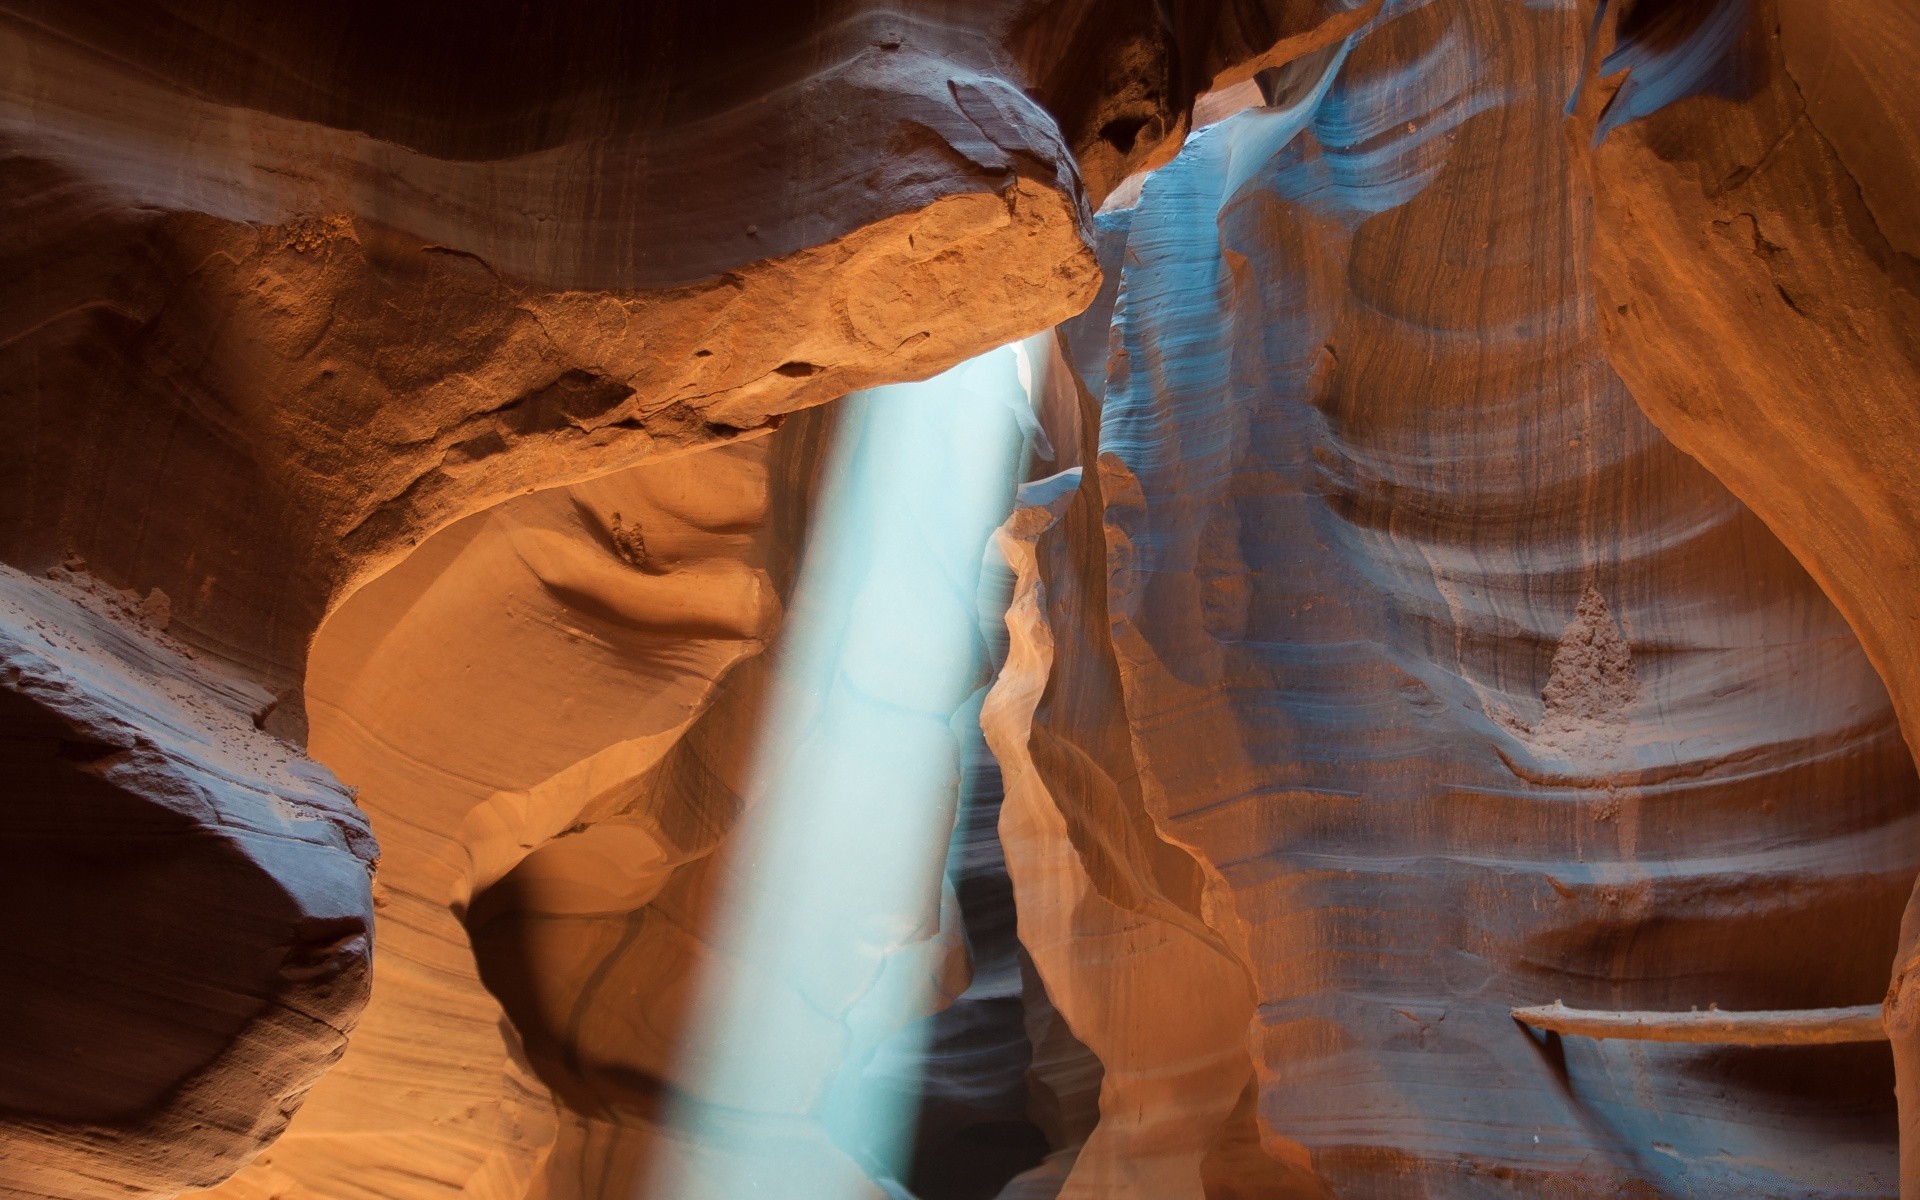 desert travel adult canyon art sandstone rock one sand cave outdoors man geology sculpture blur woman landscape